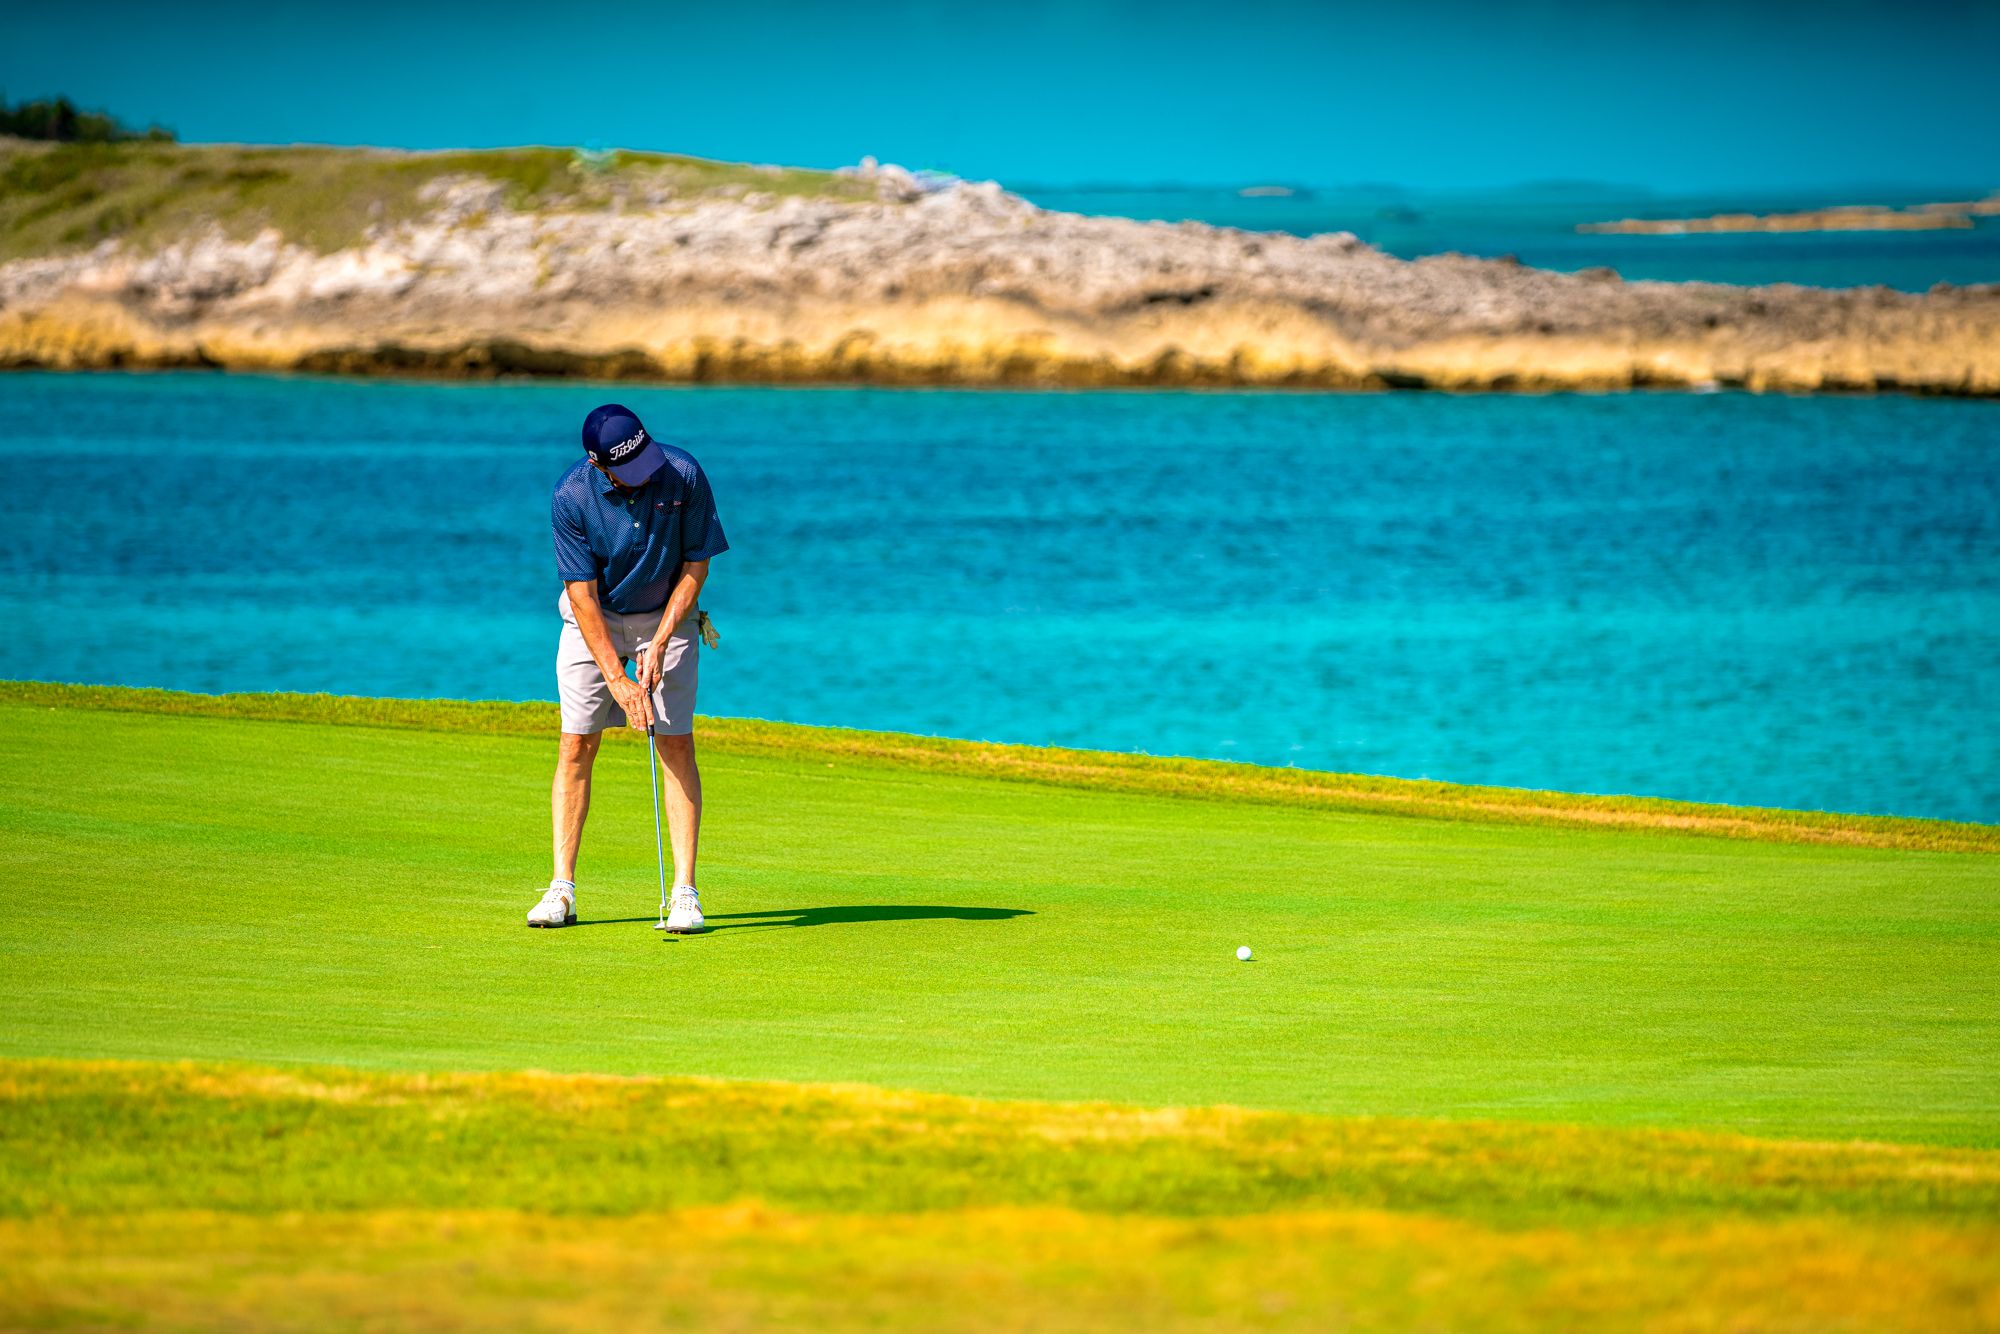 Sandals Emerald Bay Golf Course